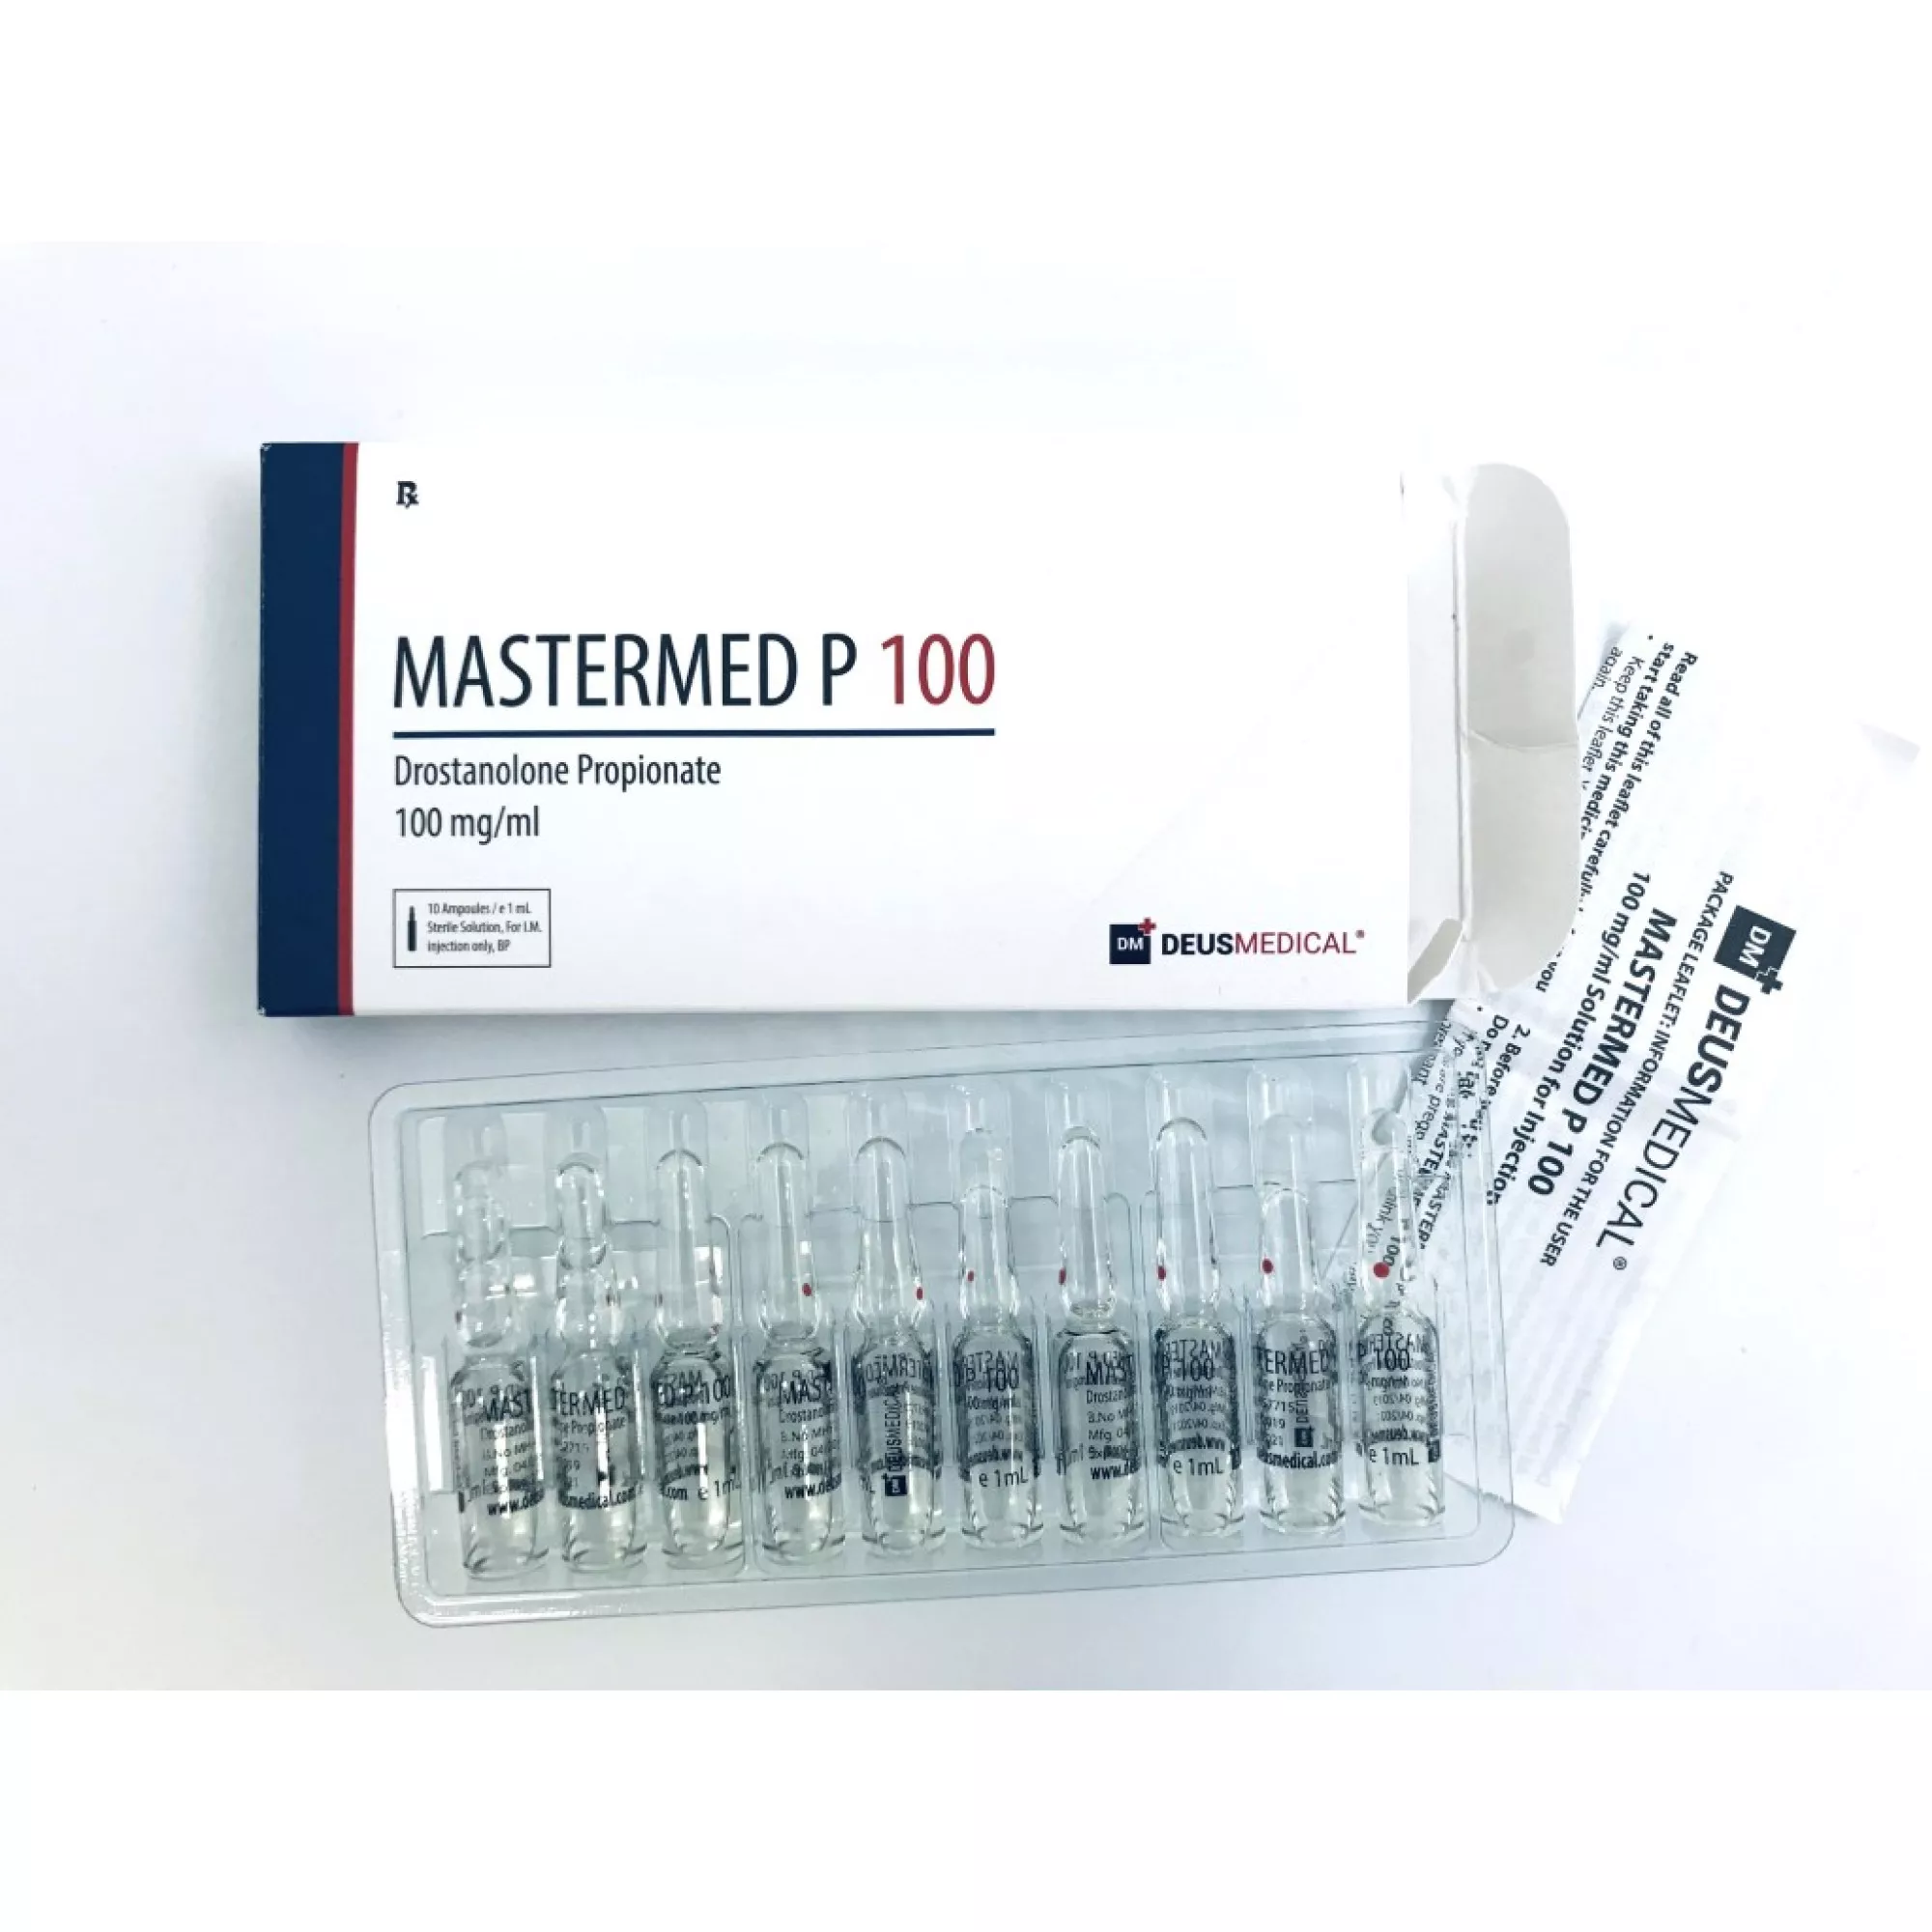 MASTERMED P 100 (Drostanolone Propionate), Deus Medical, Buy Steroids Online - www.deuspower.shop